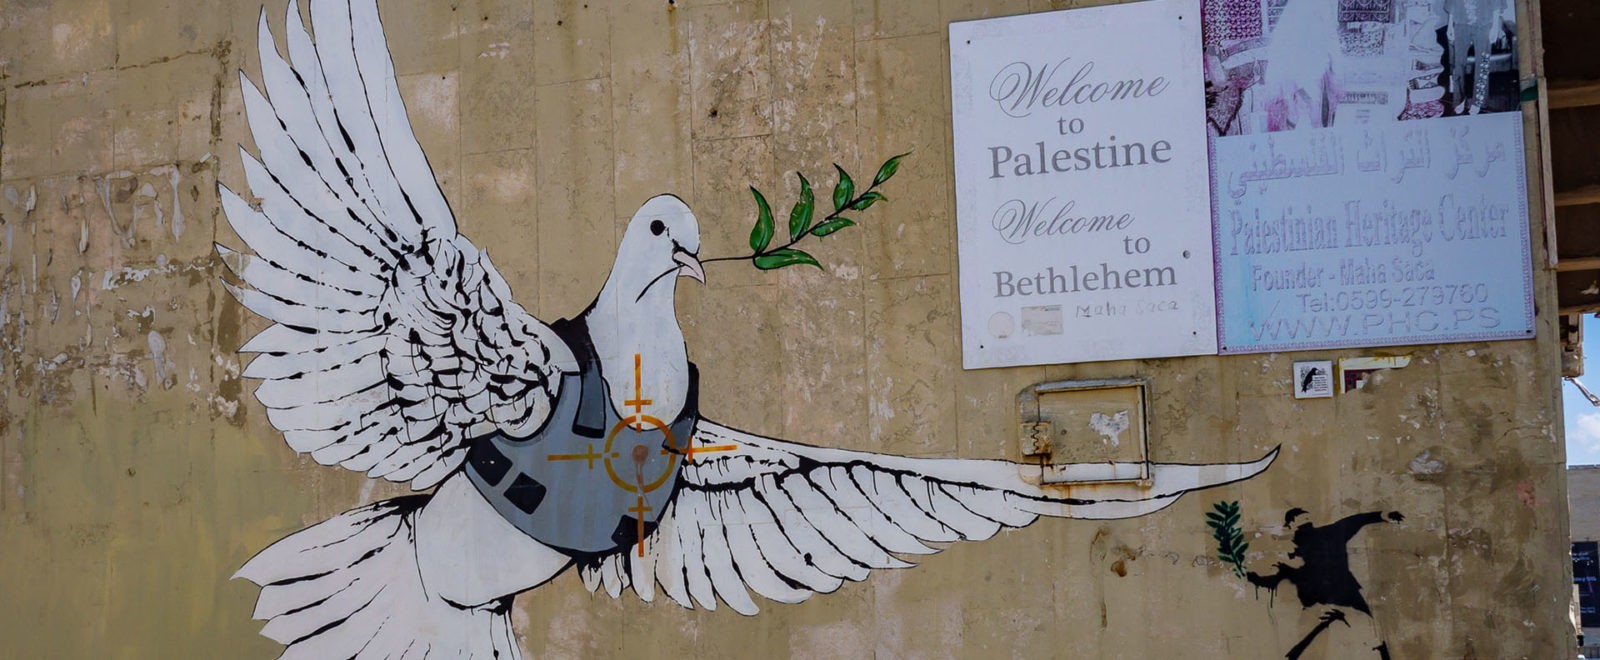 Banks'i Graffiti, Bethlehem, West Bank